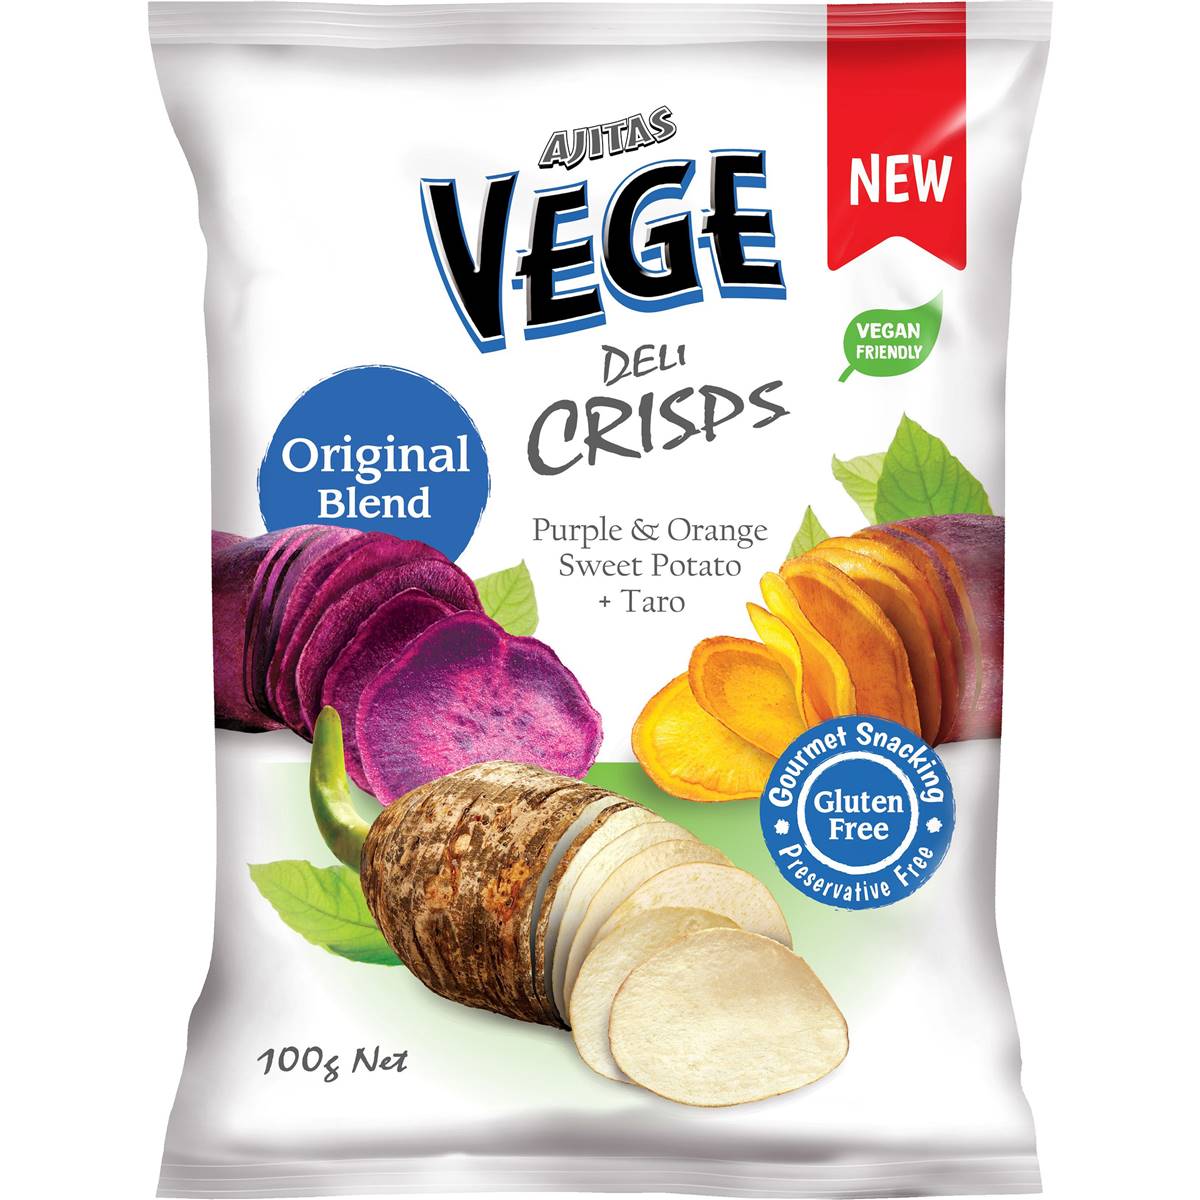 Calories in Vege Chips Deli Crisps Original